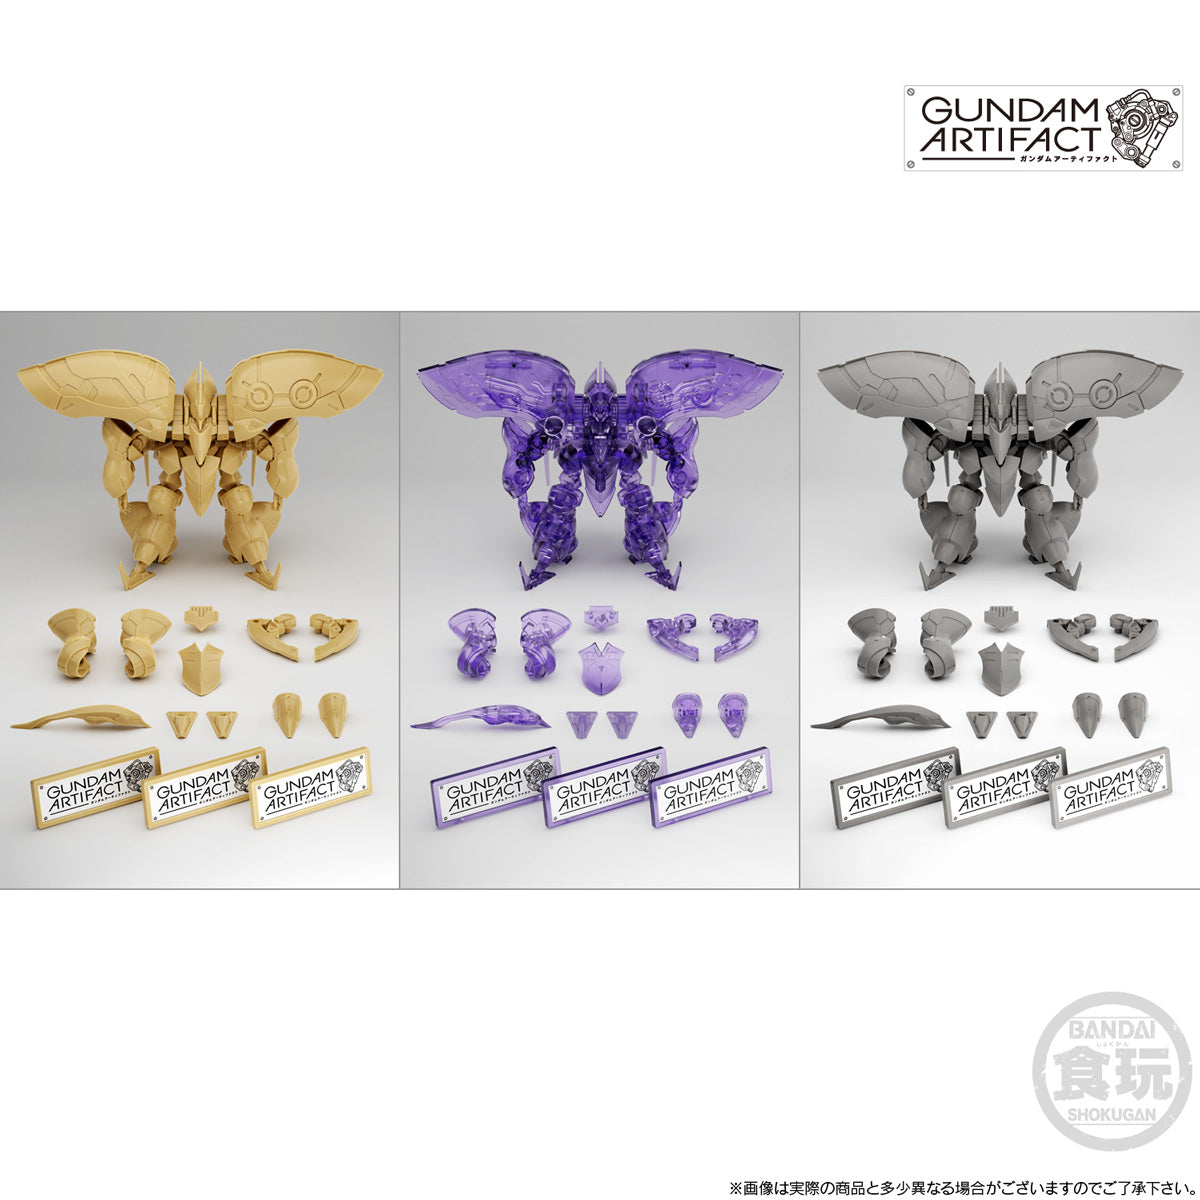 Limited Shokugan Gundam Artifact GUNDAM ARTIFACT “MASS-PRODUCED QUBELEY・QUBELEY COMPATIBLE 3 PIECES SET”